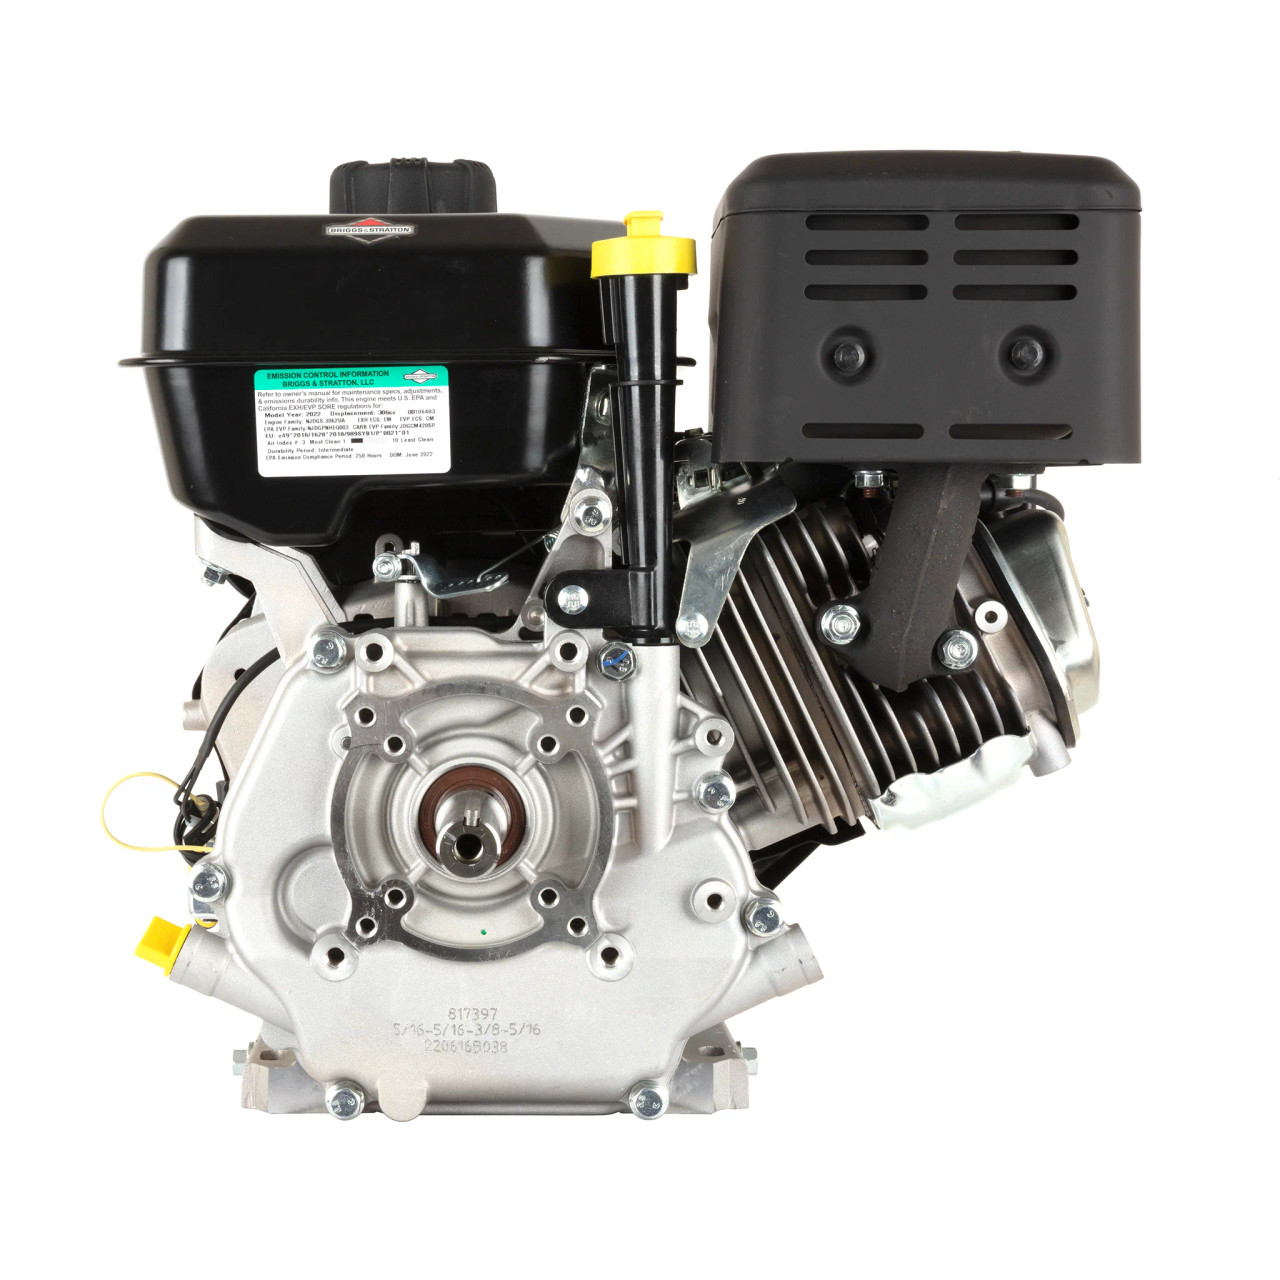 XR Series 10.0 HP 306cc Horizontal Shaft Engine 19N132-0019-F1